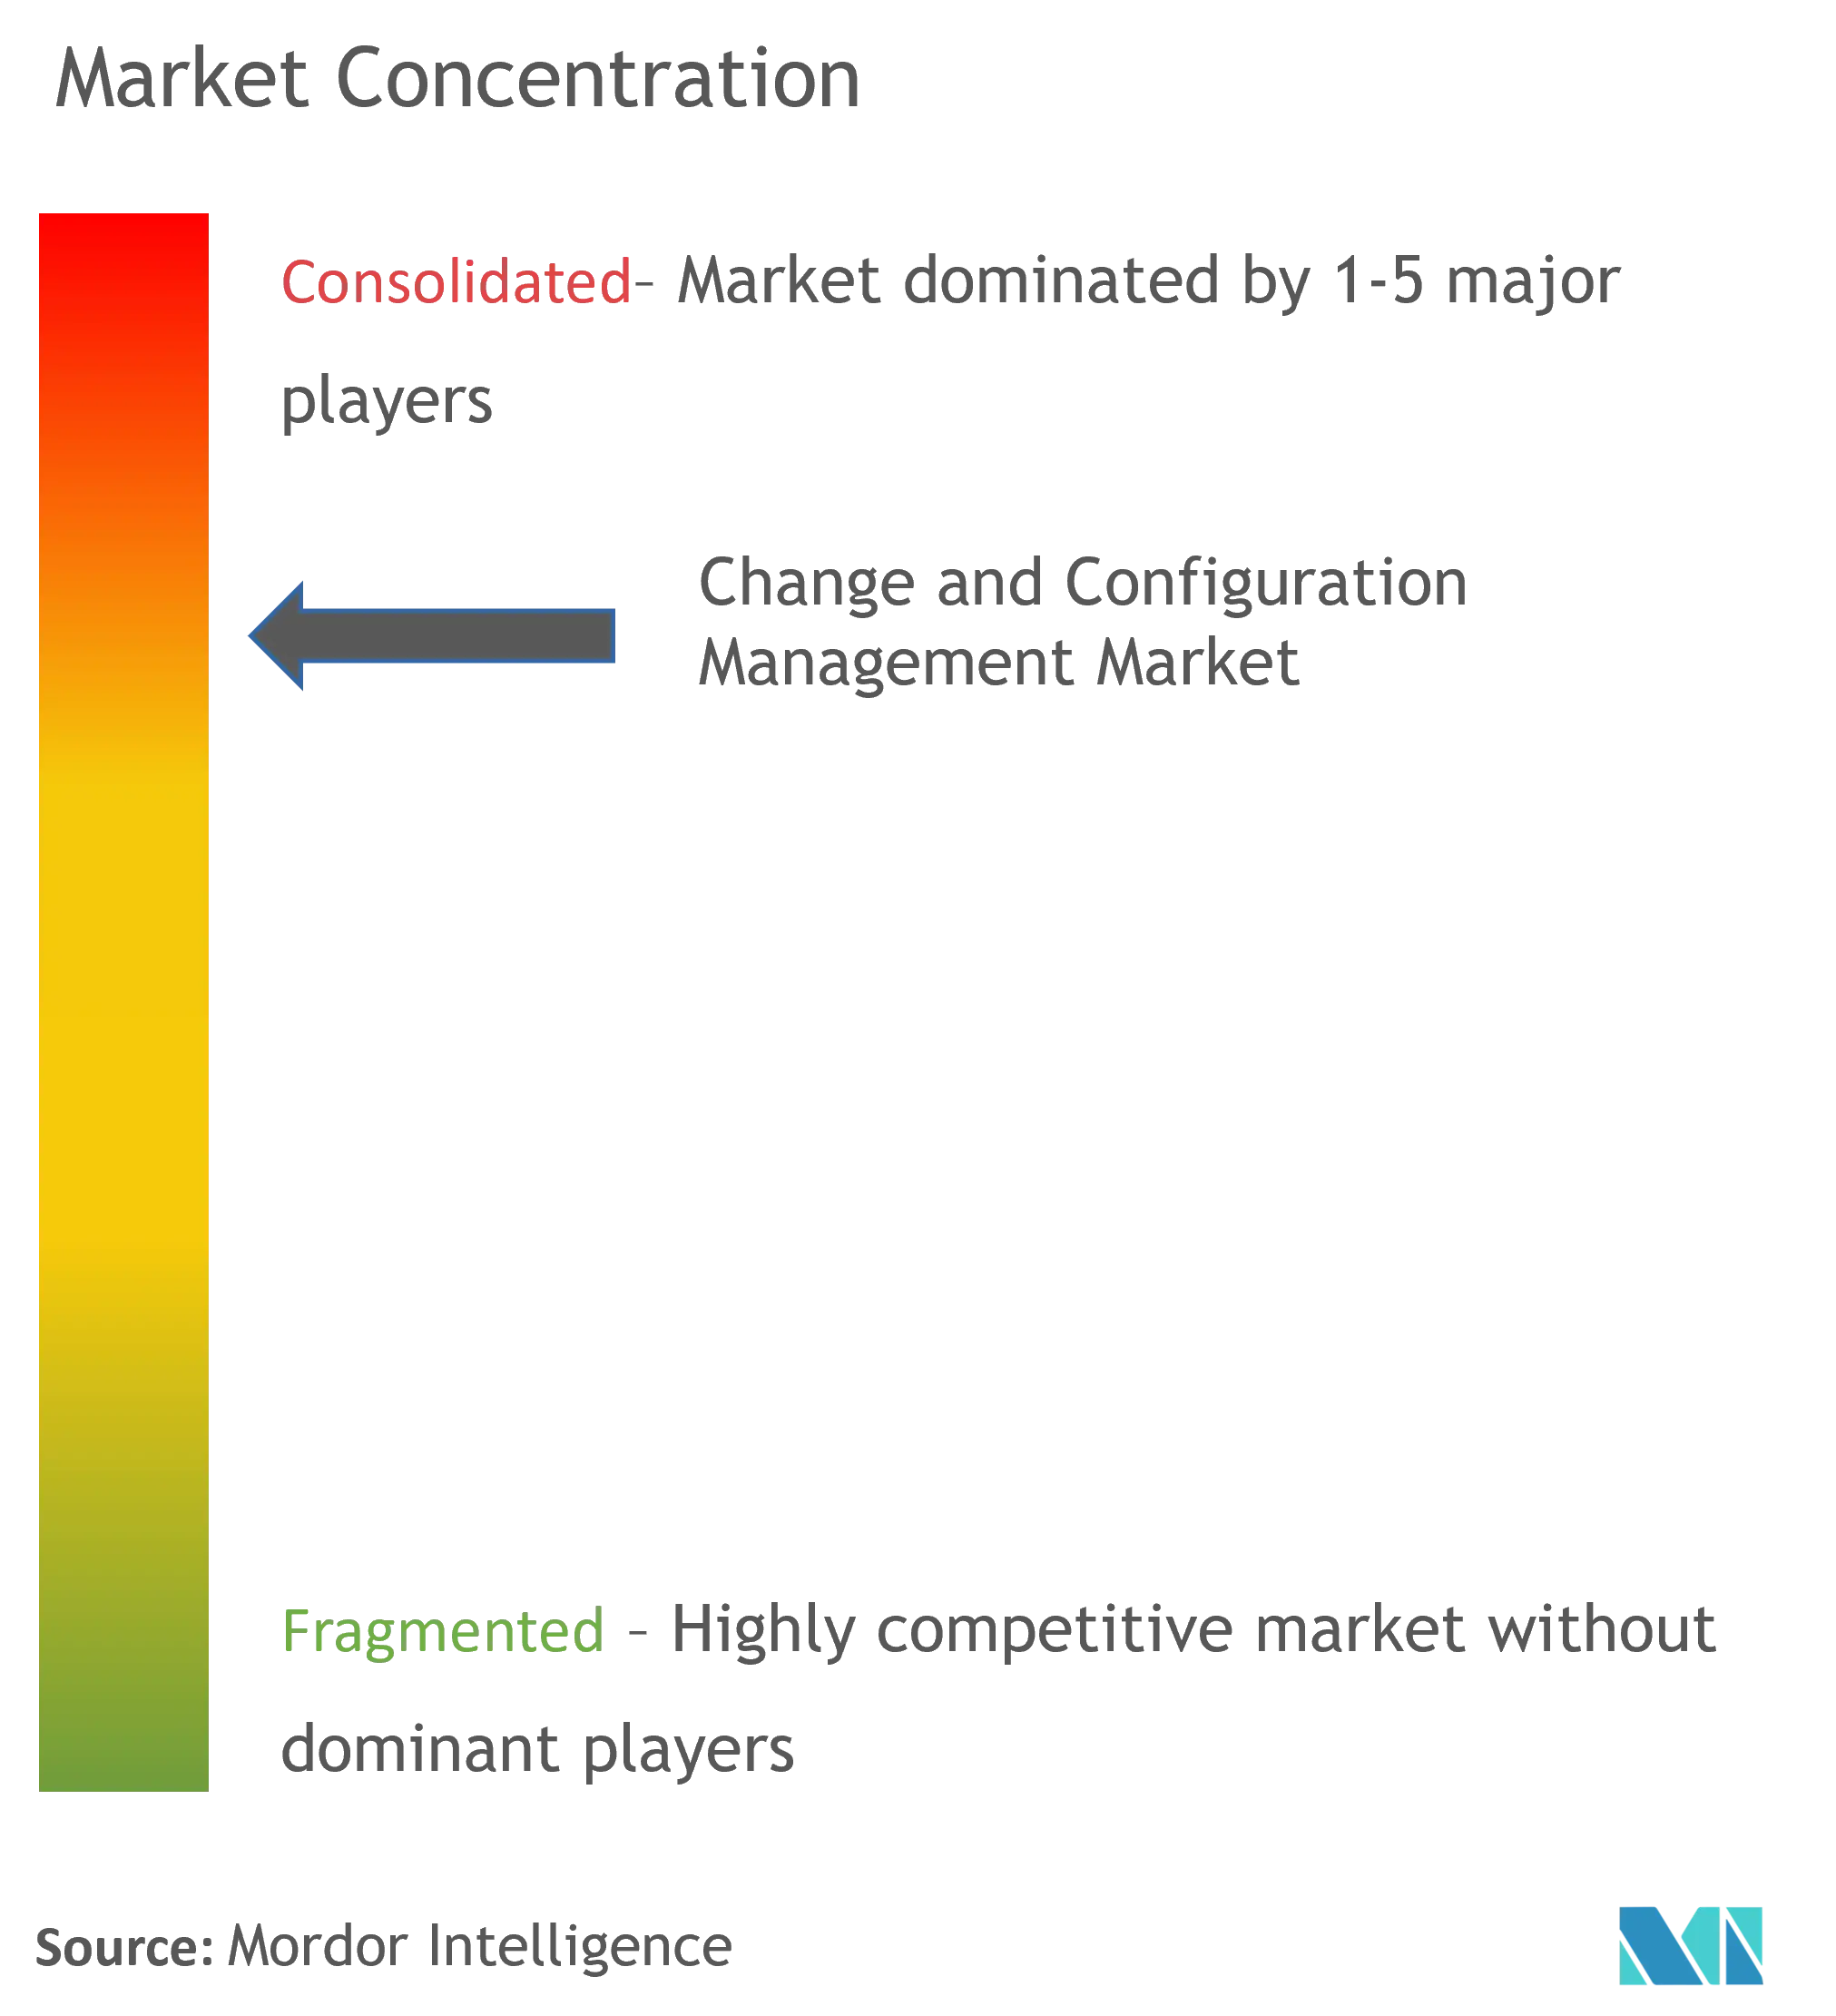 Change And Configuration Management Market Concentration